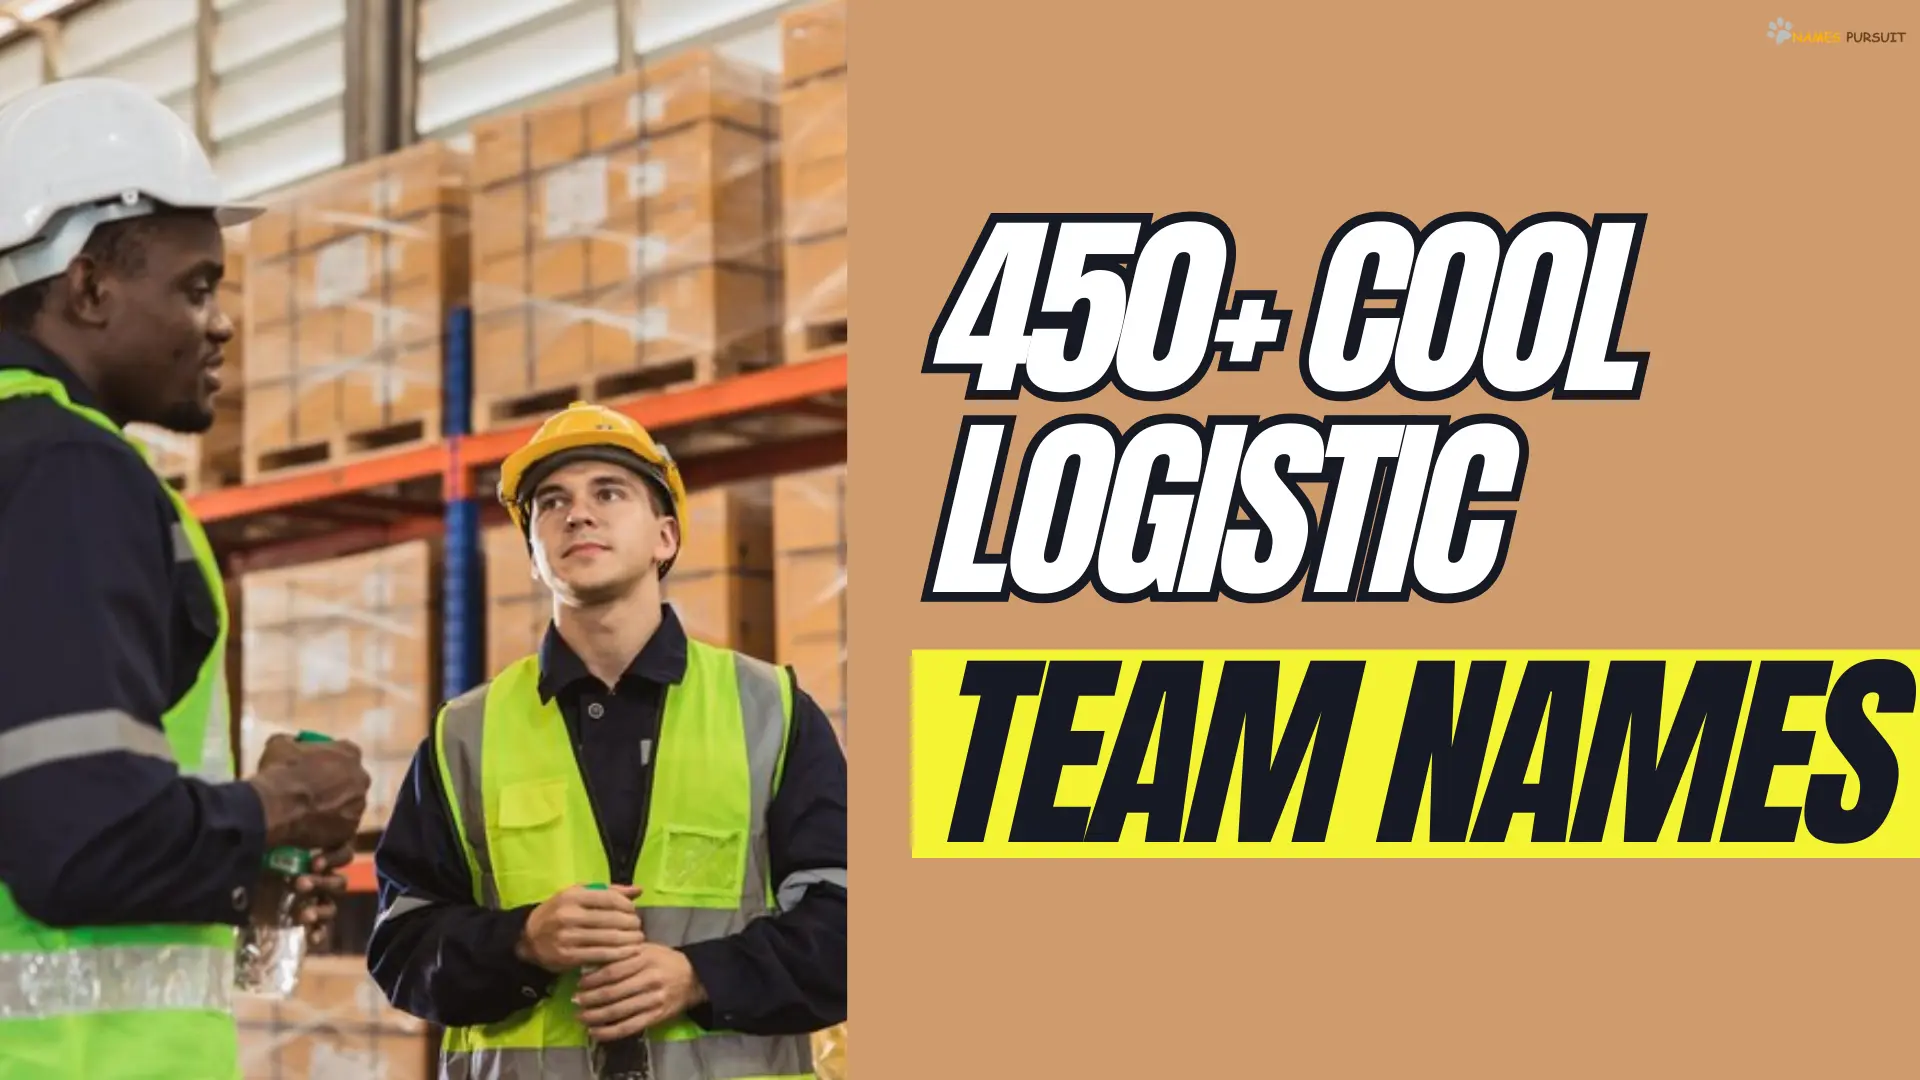 Cool Logistic Team Names